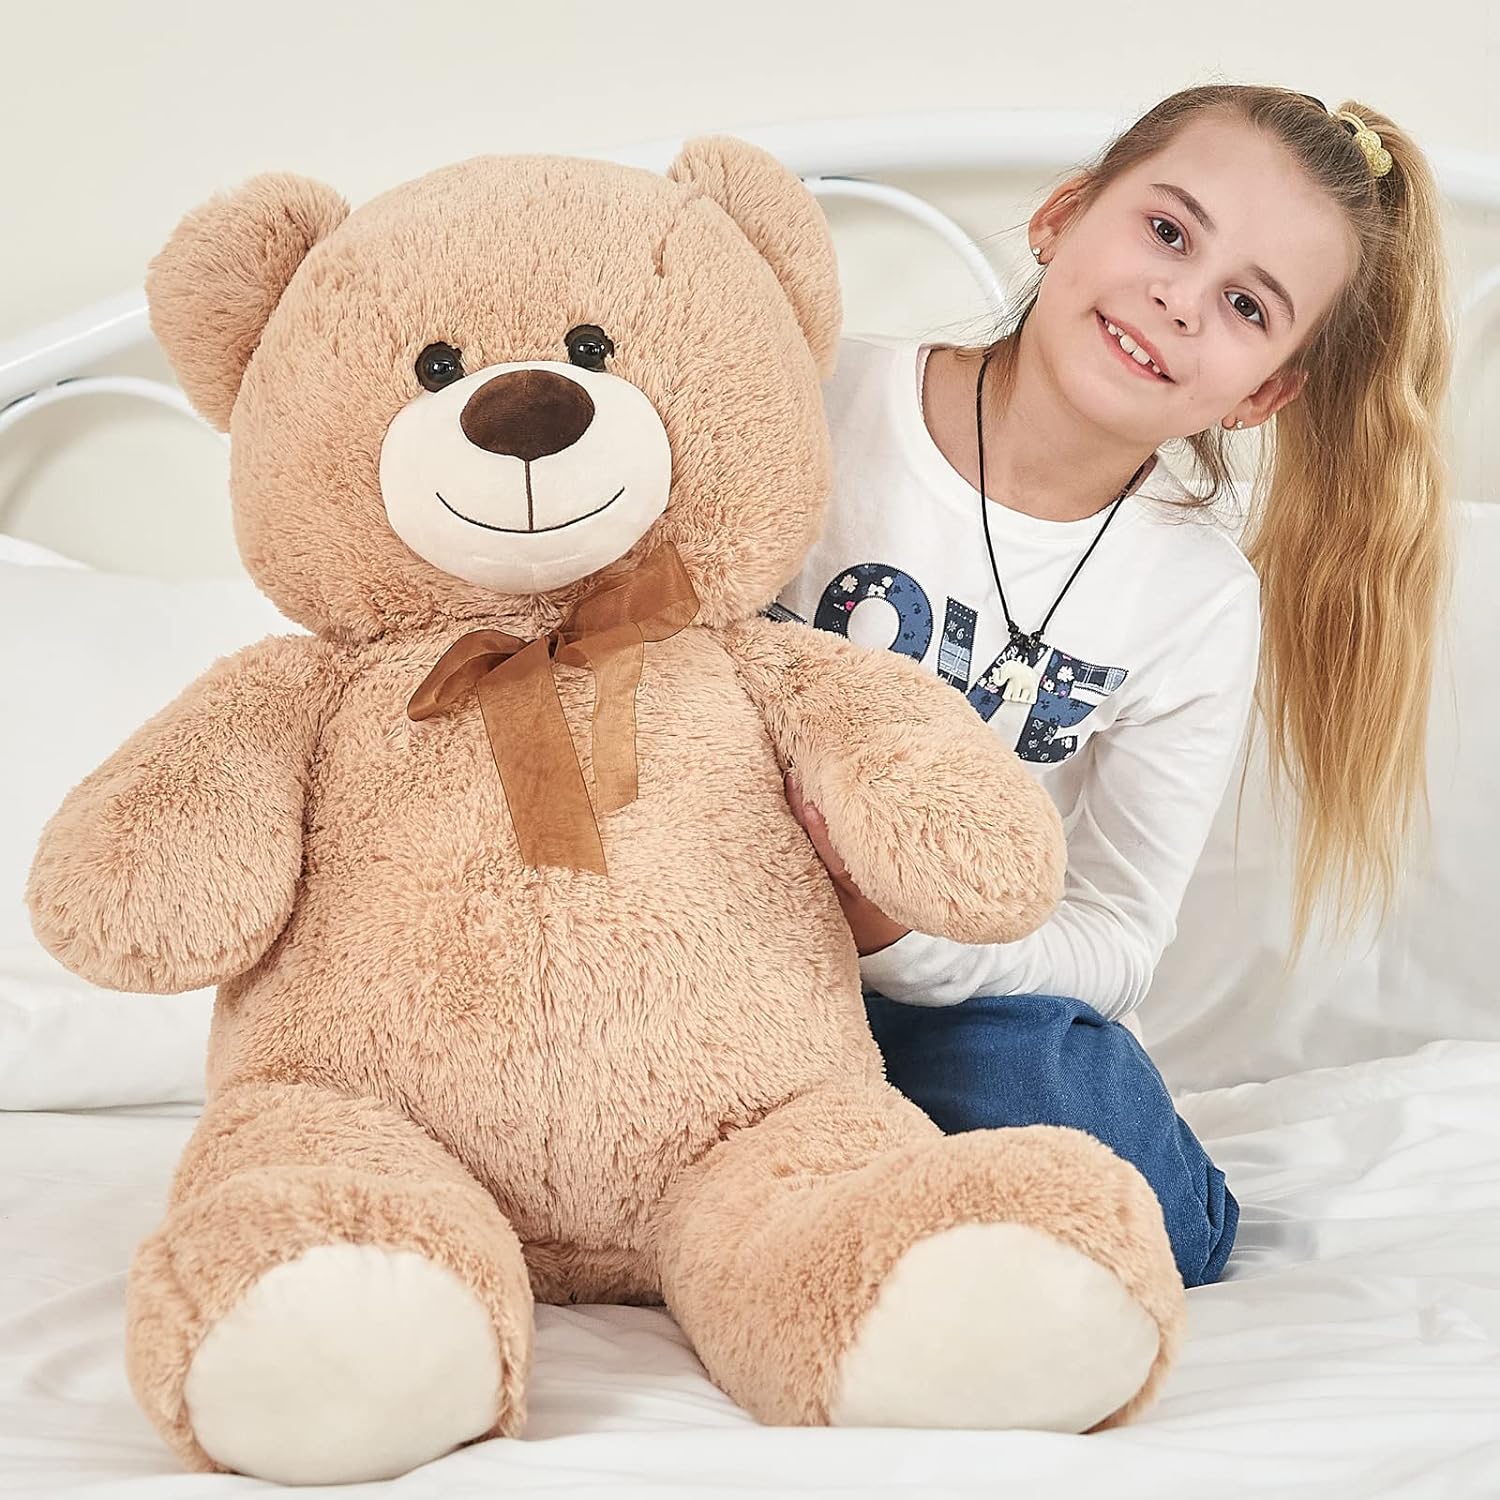 Cybil Home Giant Teddy Bear Soft Plush Bear Stuffed Animal for Girlfriend Kids,35 Inches (Purple)